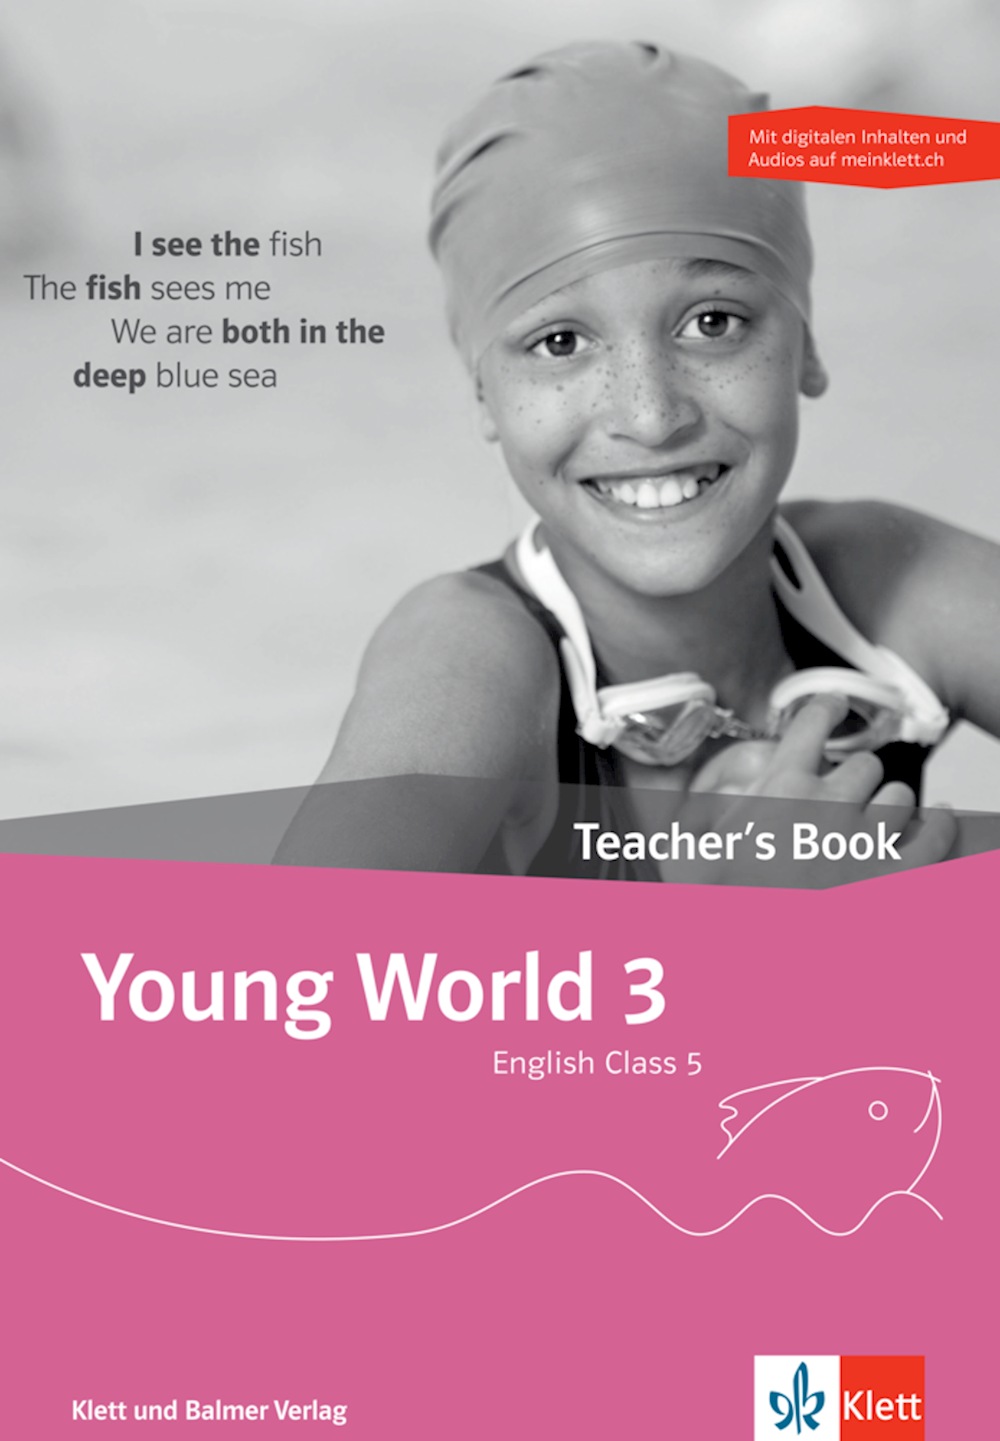 Young World 3, Teacher's Book, Audio, On line-Inhalte